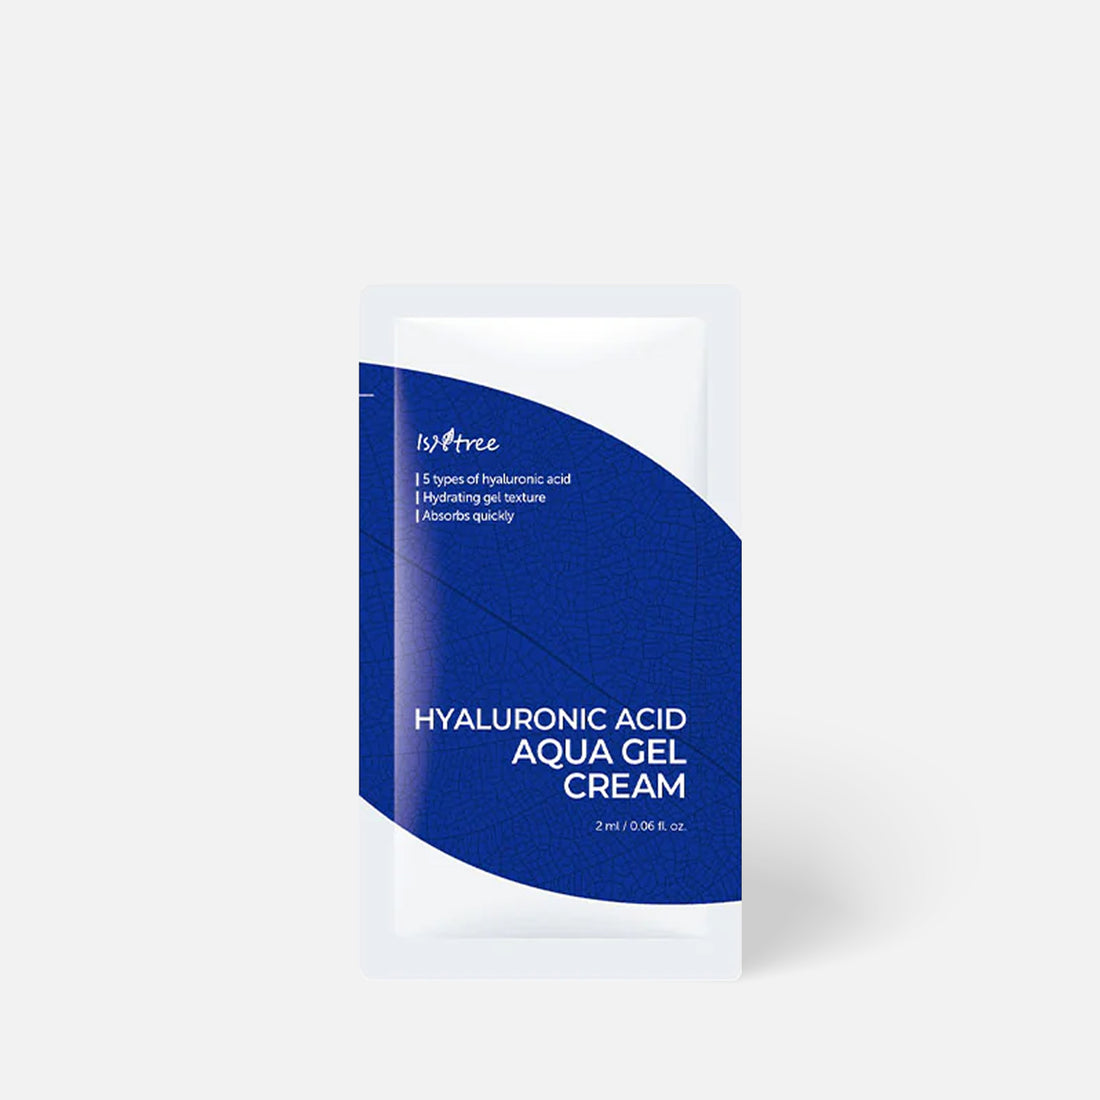 IsNtree Hyaluronic Acid Aqua Gel Cream Sample